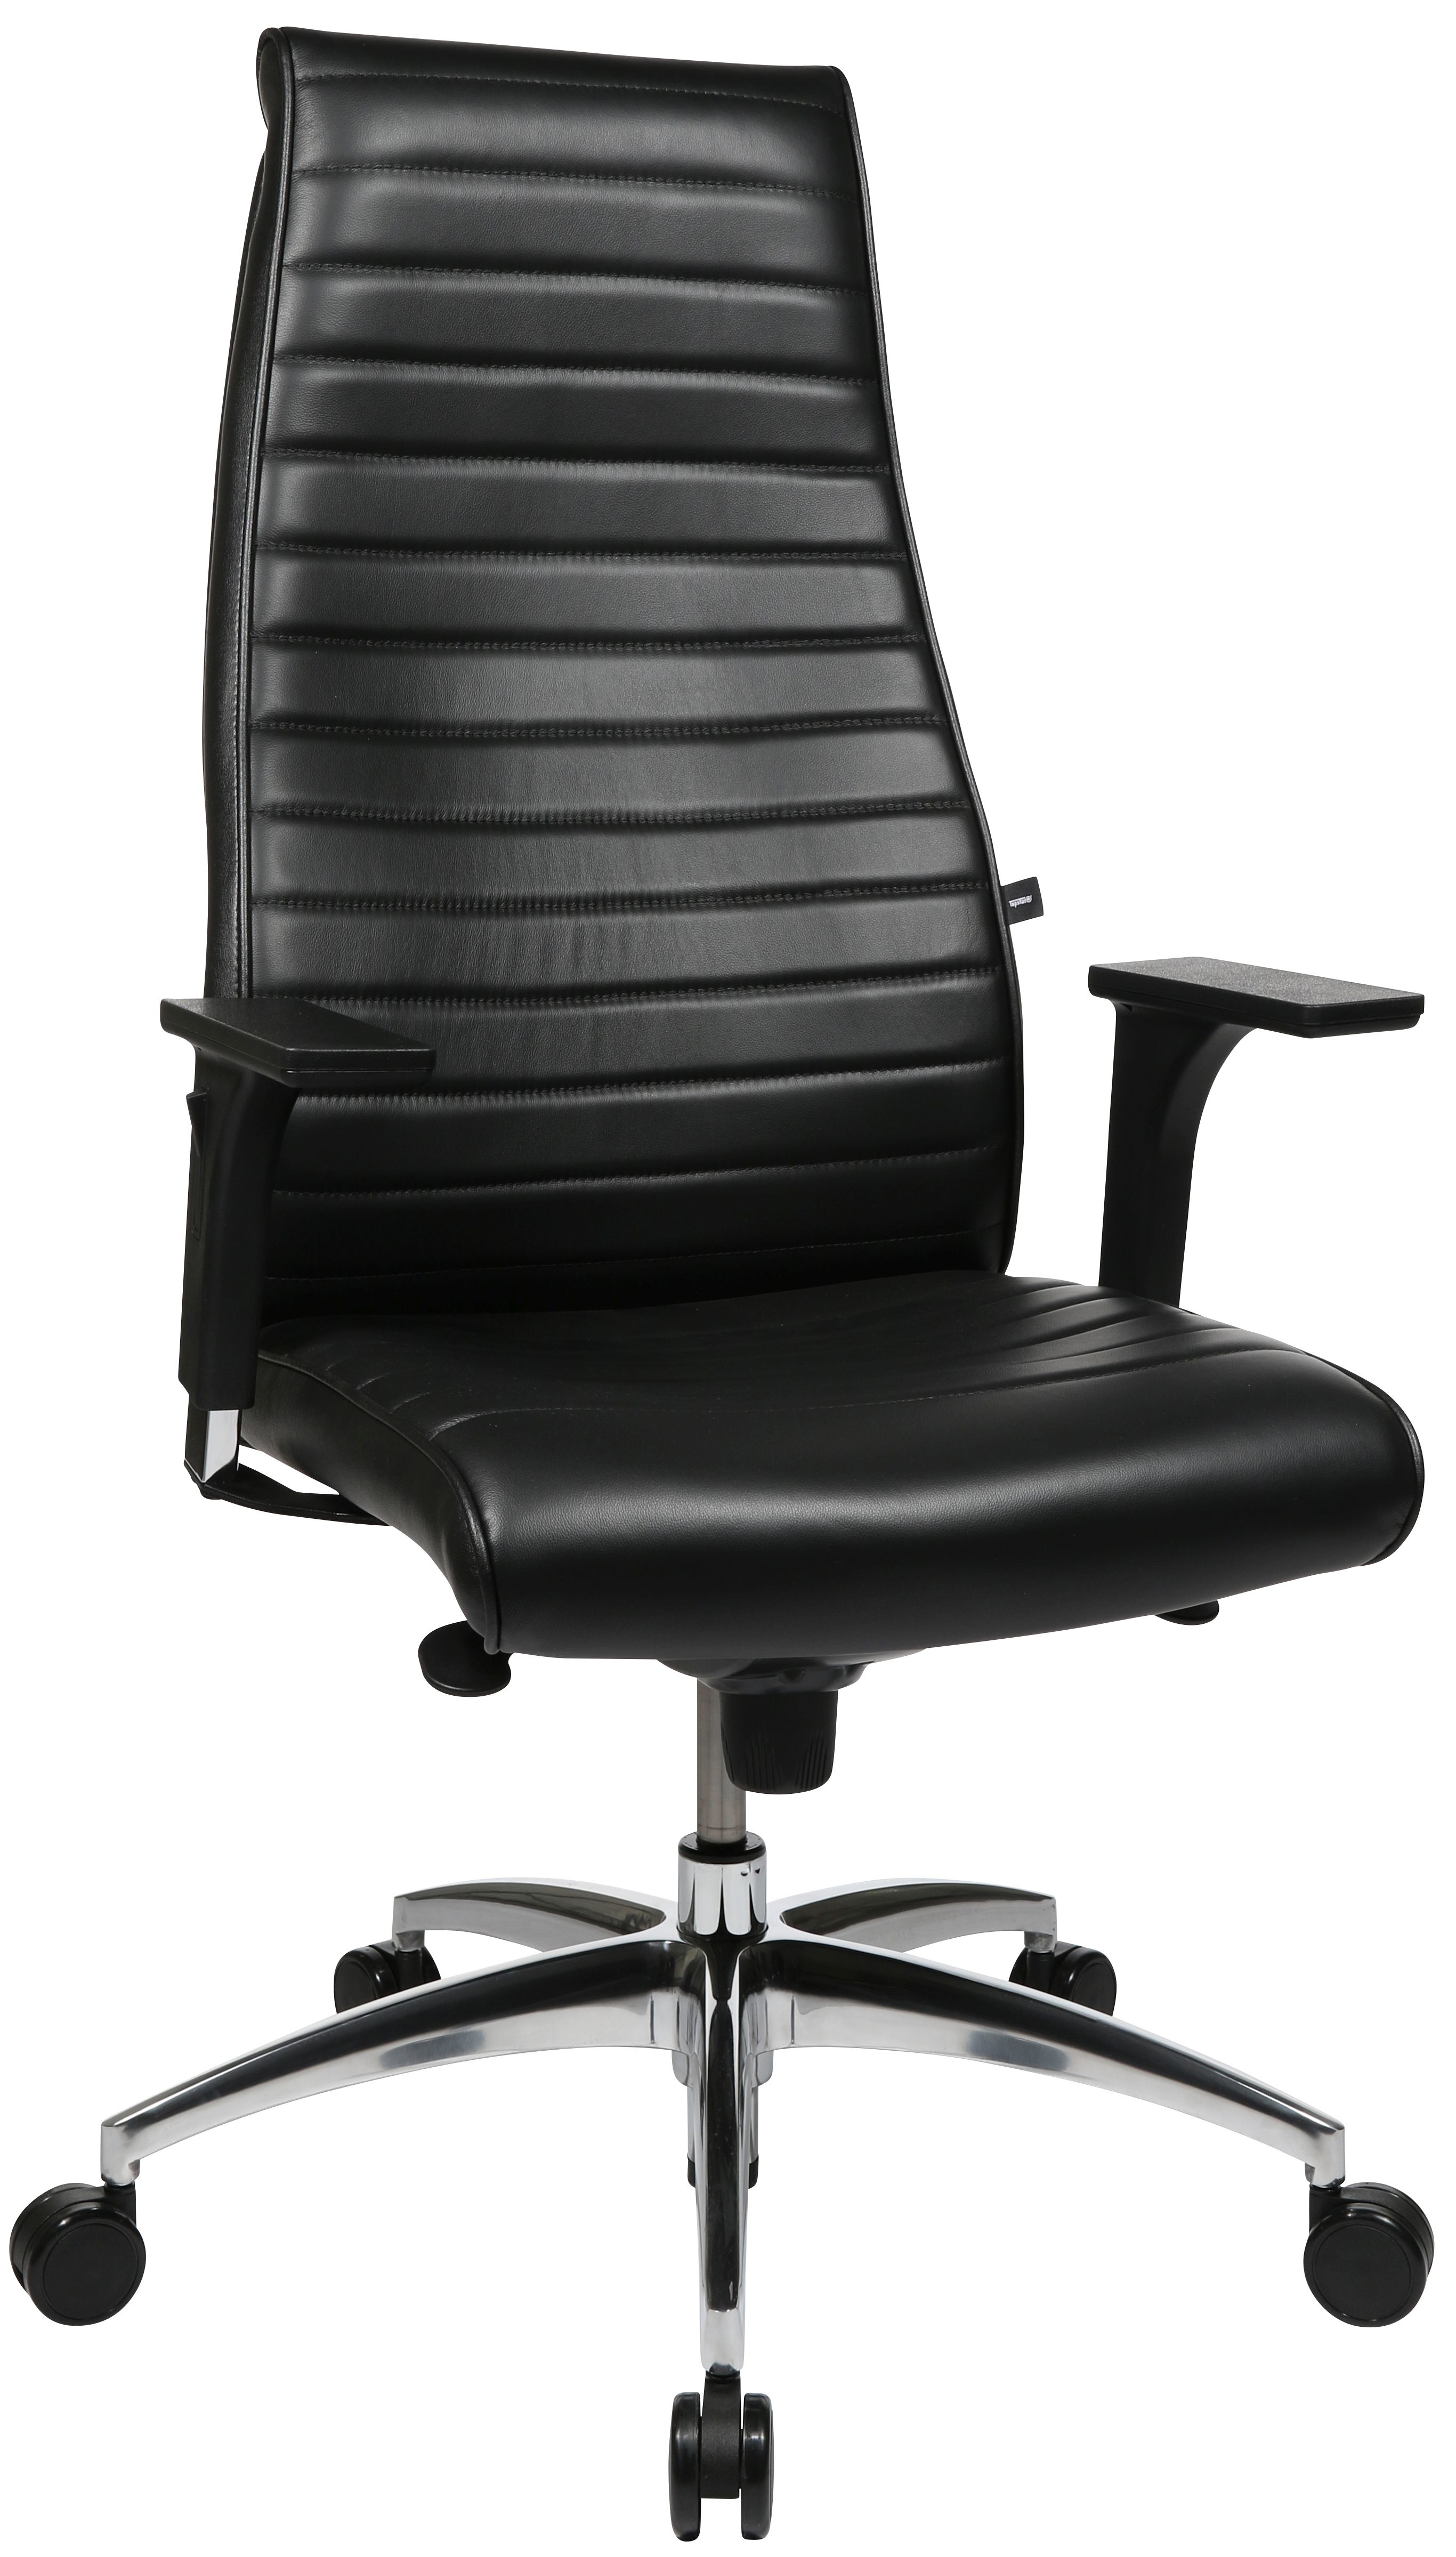 TOPSTAR Chaise de bureau Chairman X SO9089S A80 noir